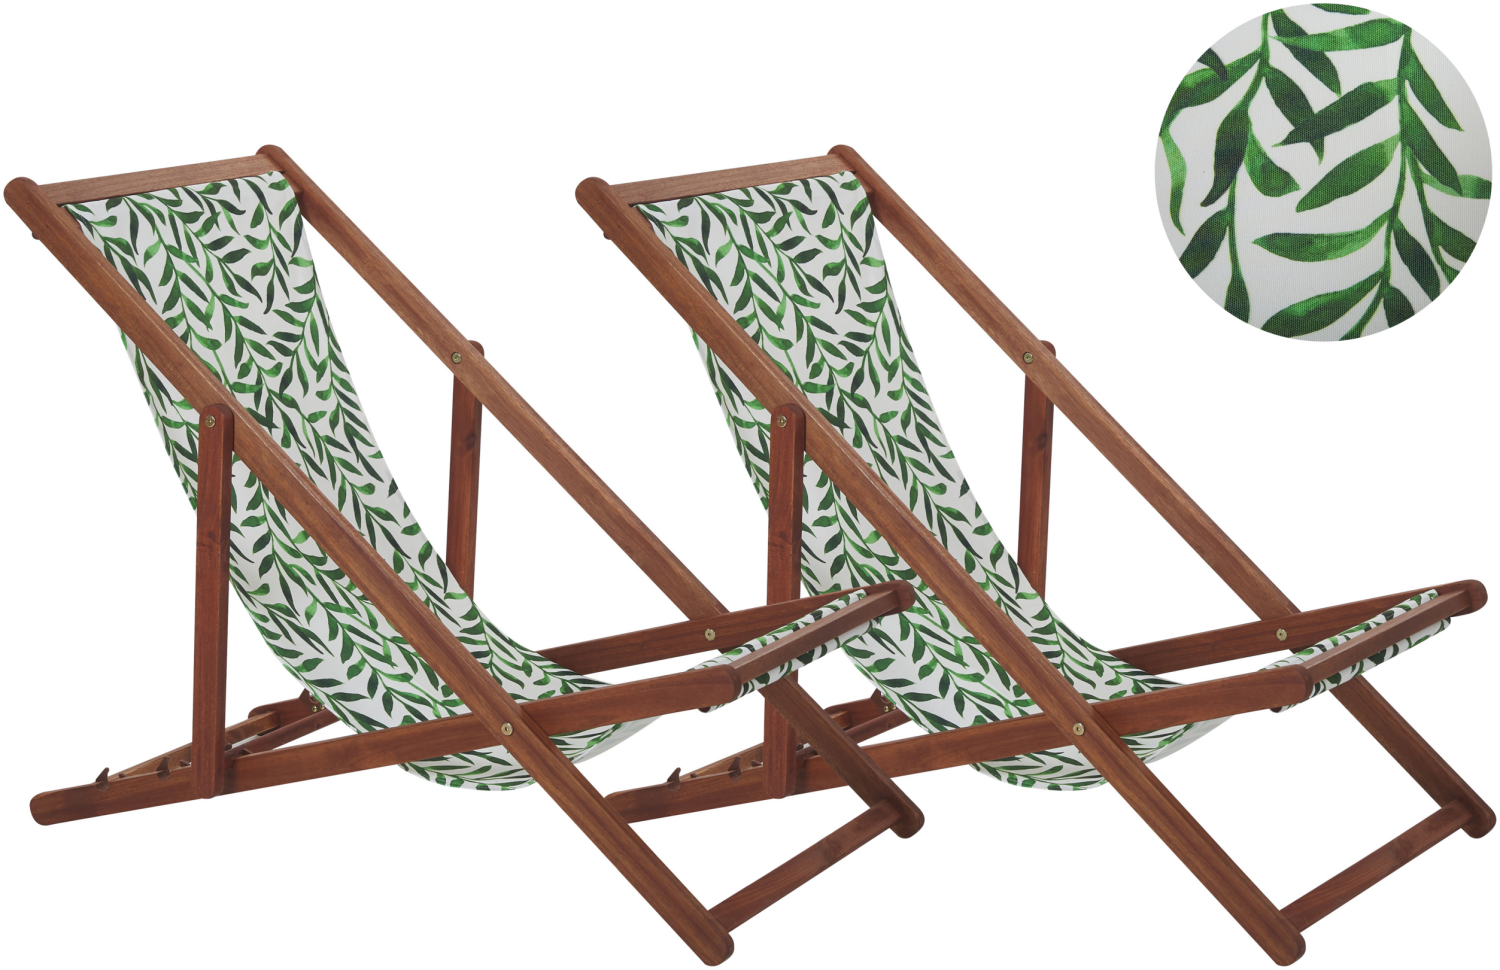 Liegestuhl Akazienholz hellbraun Textil weiß grün Blattmuster 2er Set ANZIO Bild 1